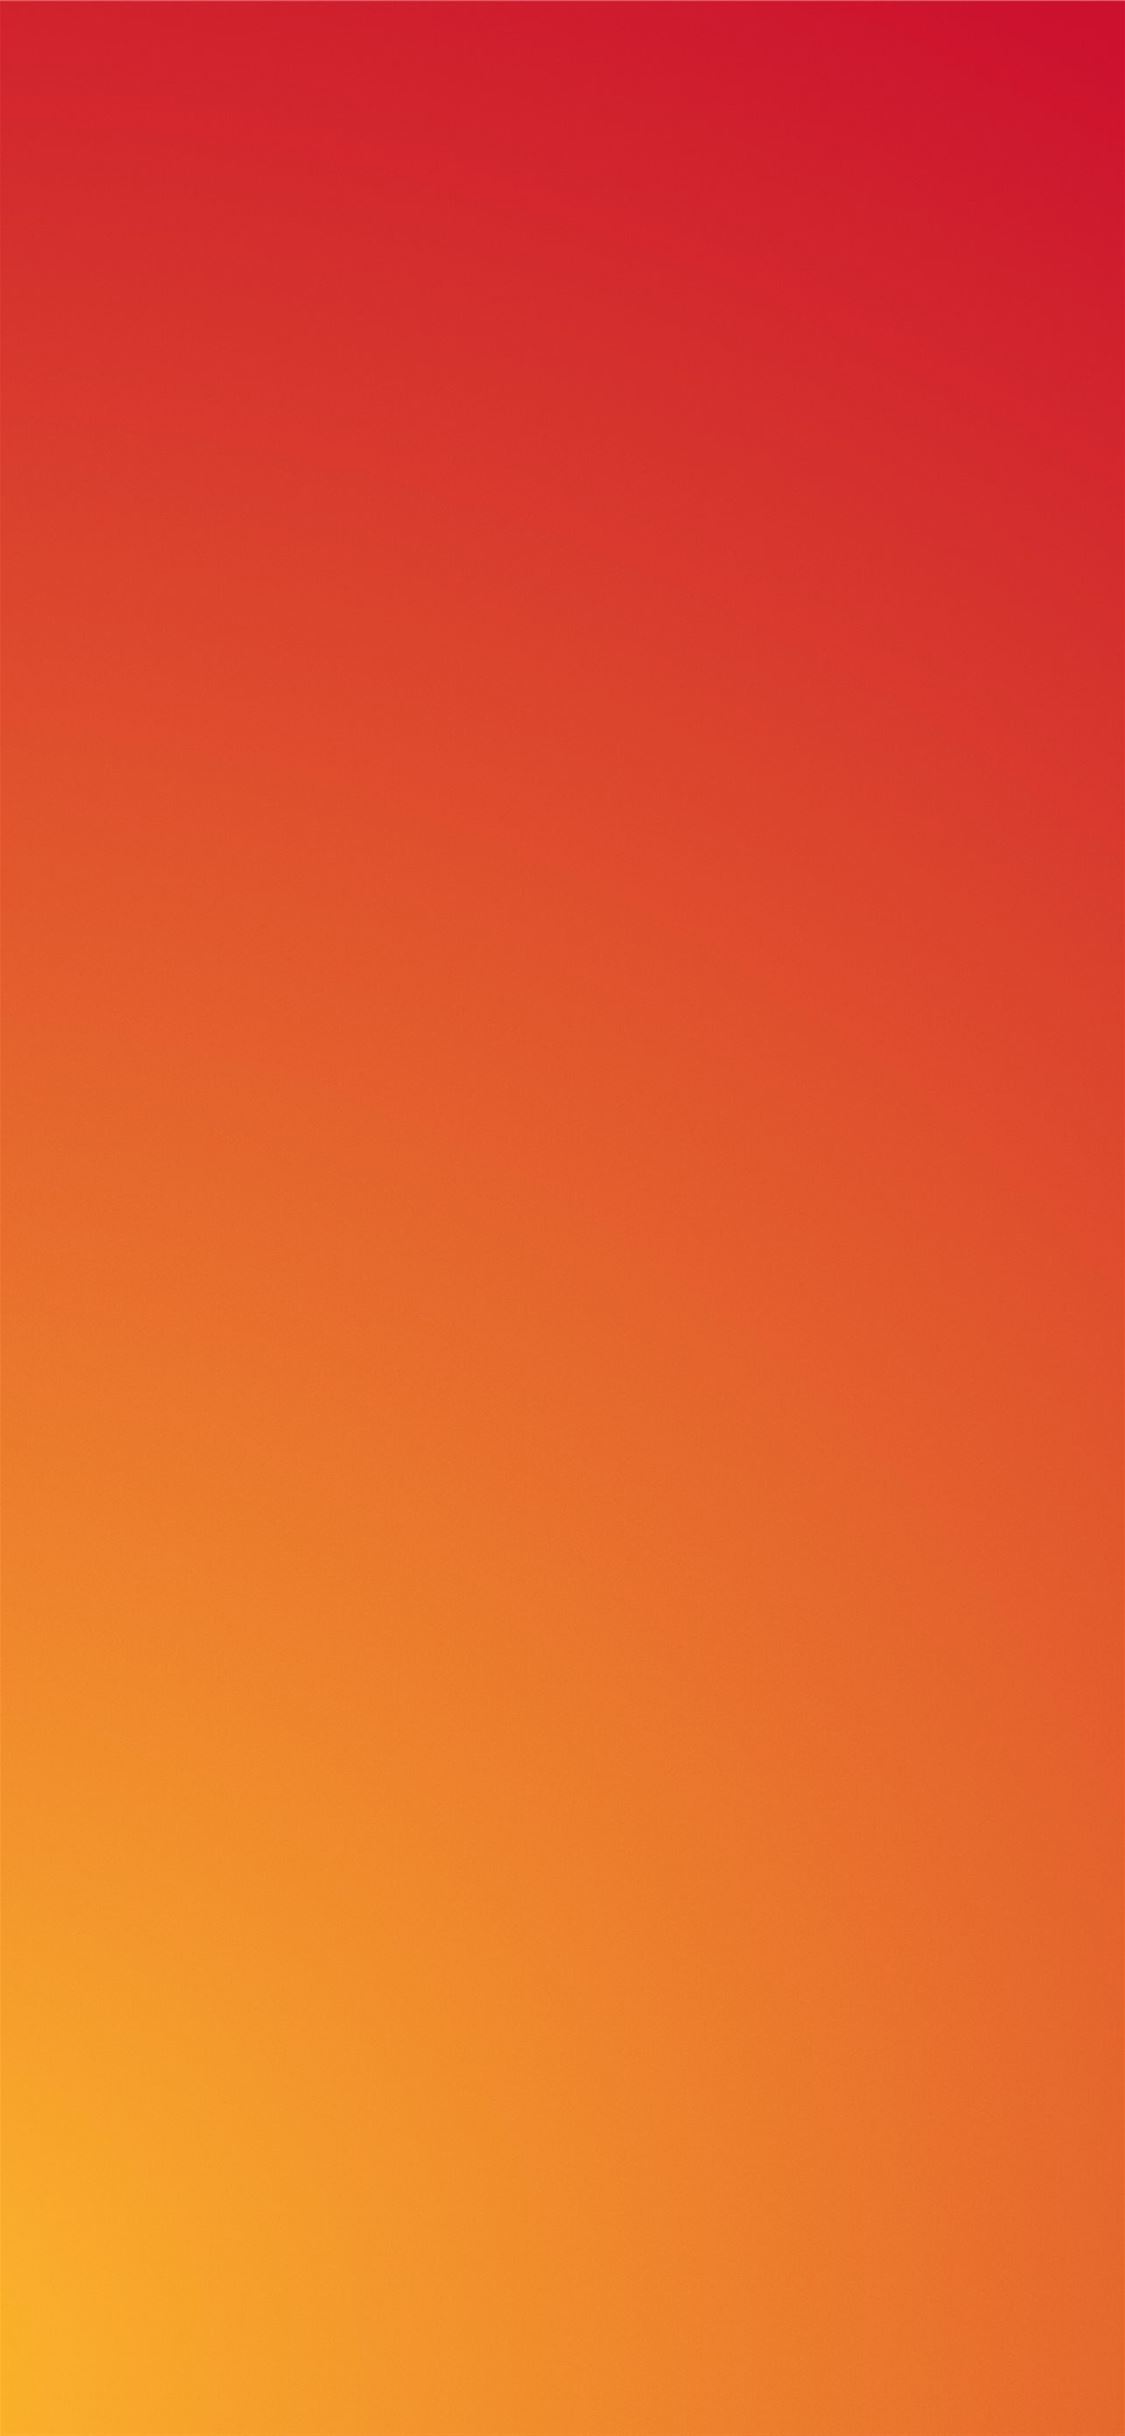 Dark orange to blood red gradient iPhone 11 Wallpapers Free Download